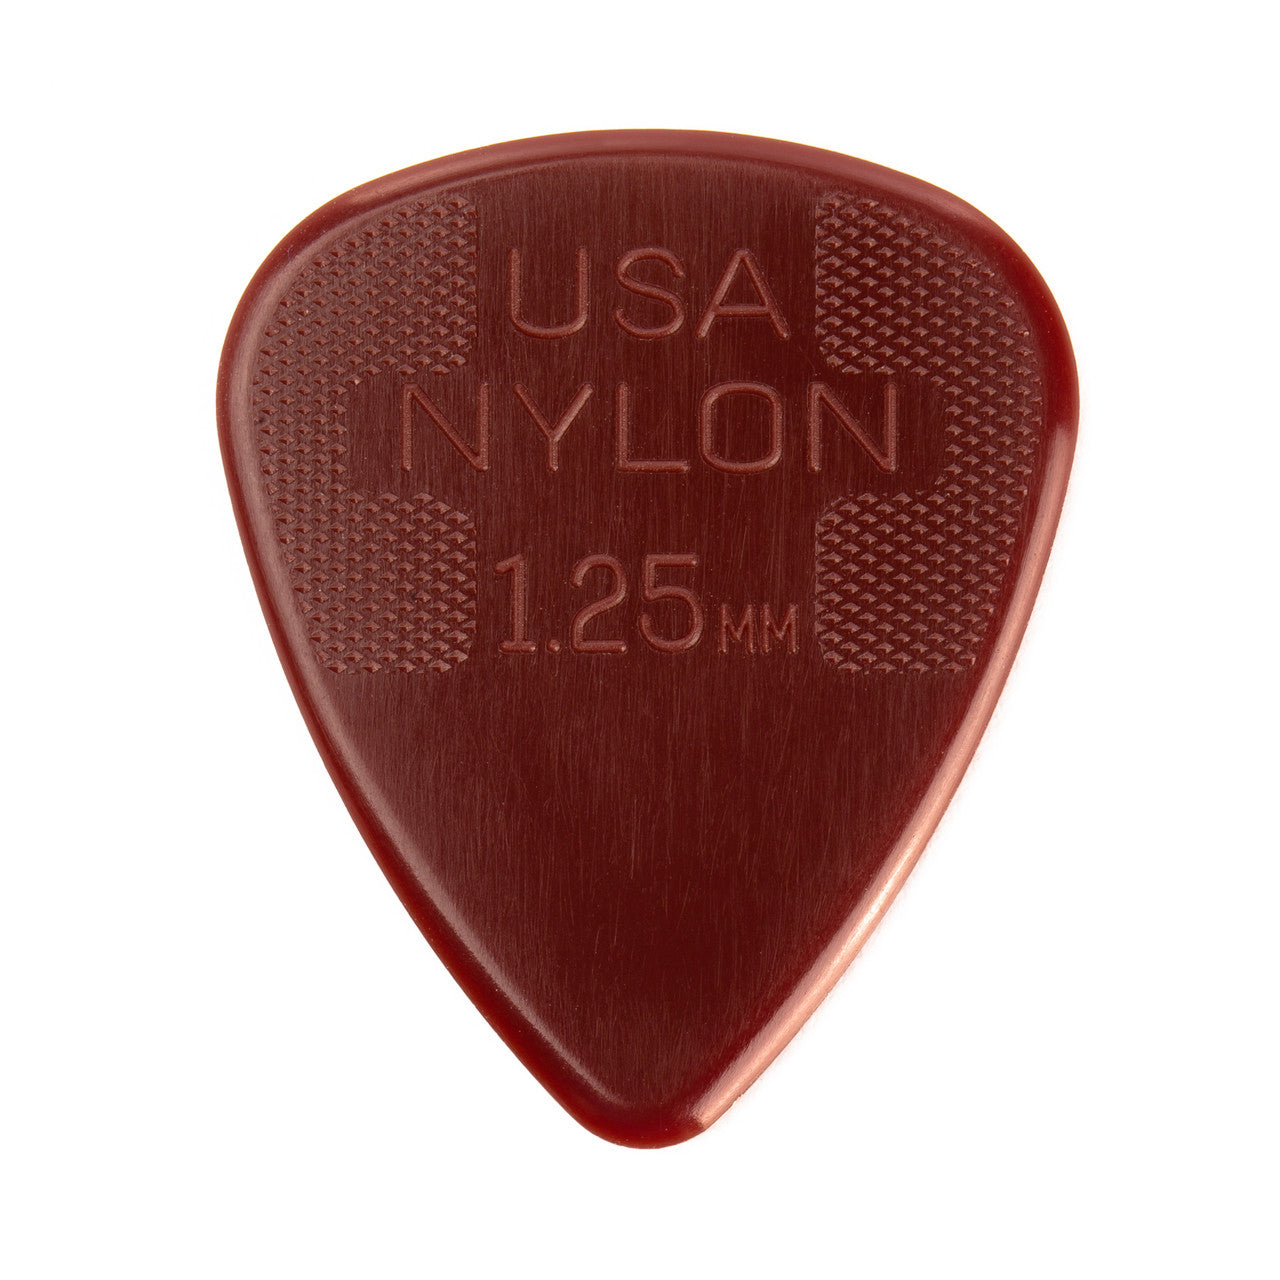 Dunlop Nylon Standard Pick 1.25mm